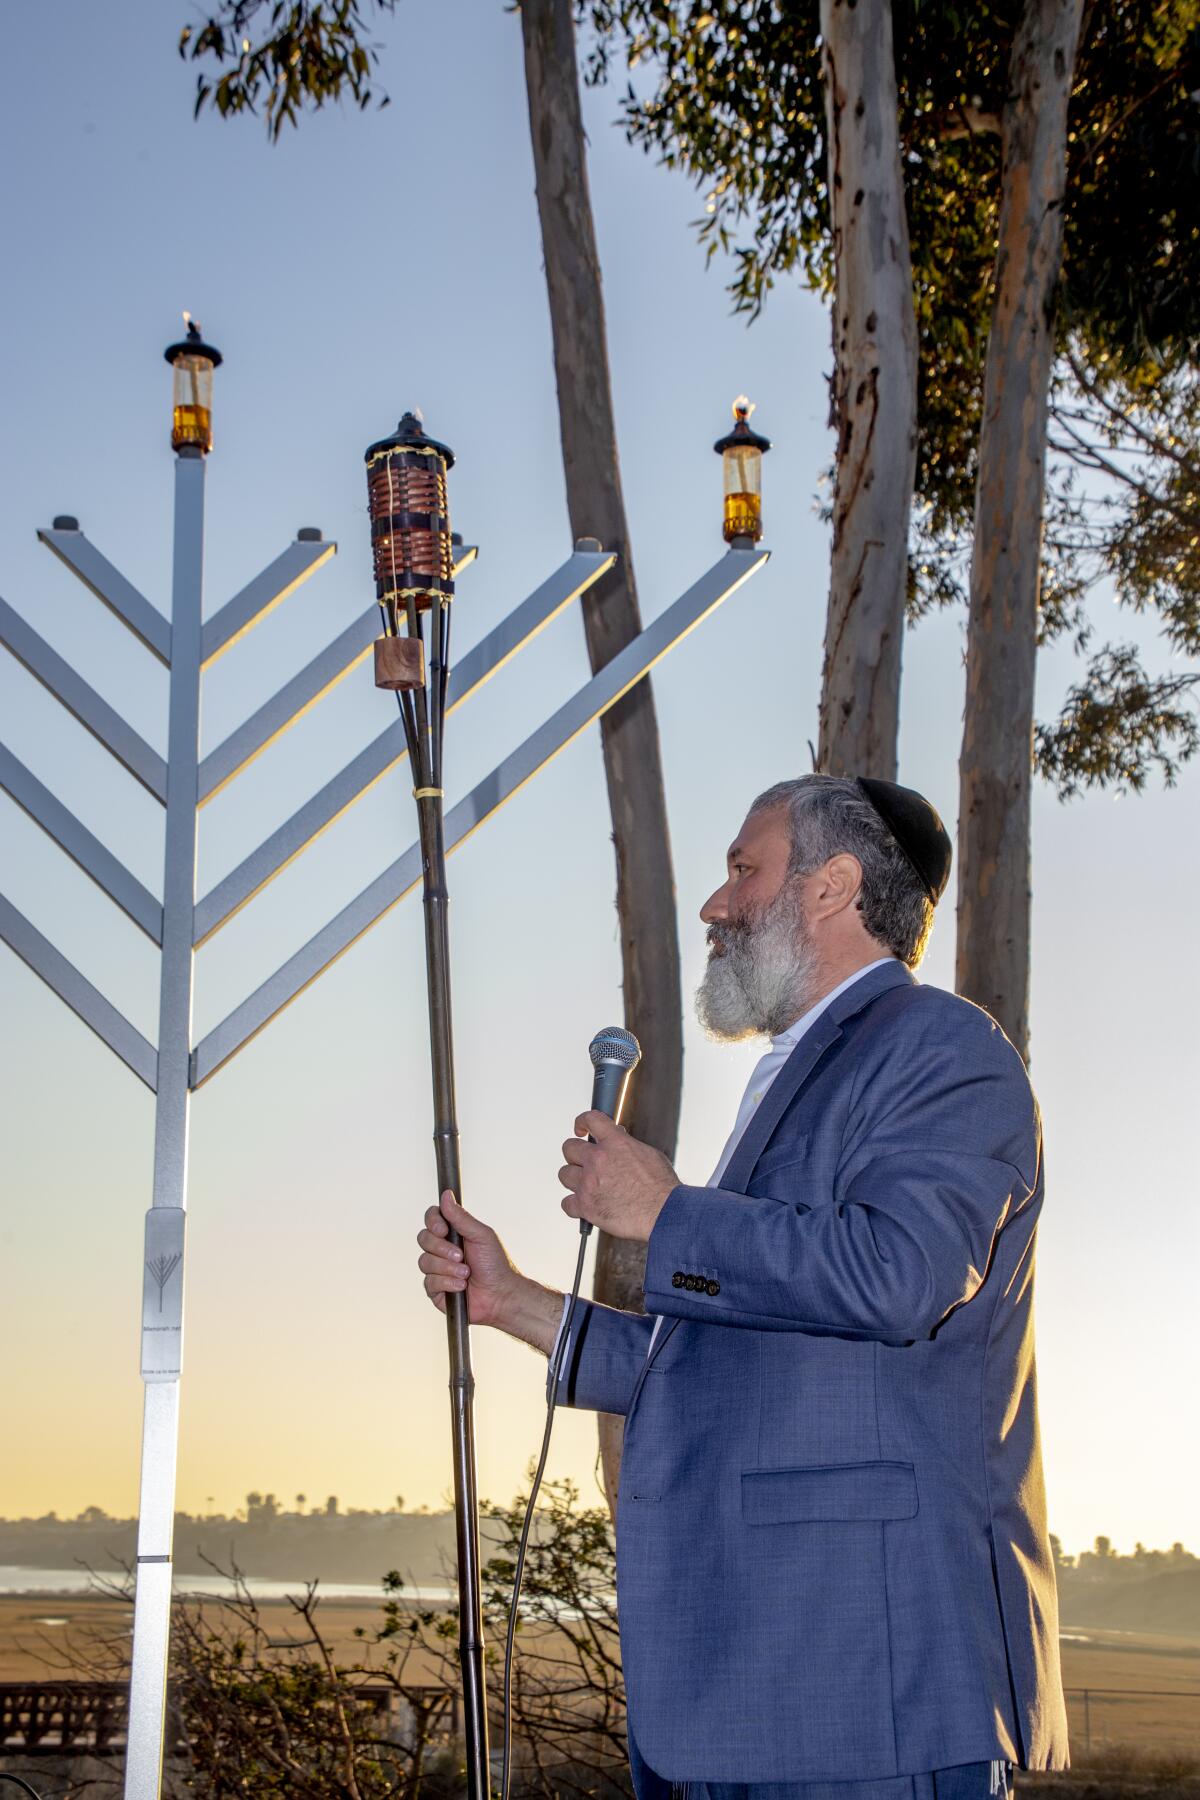 Rabbi Reuben Mintz completes the lighting of the menorah.